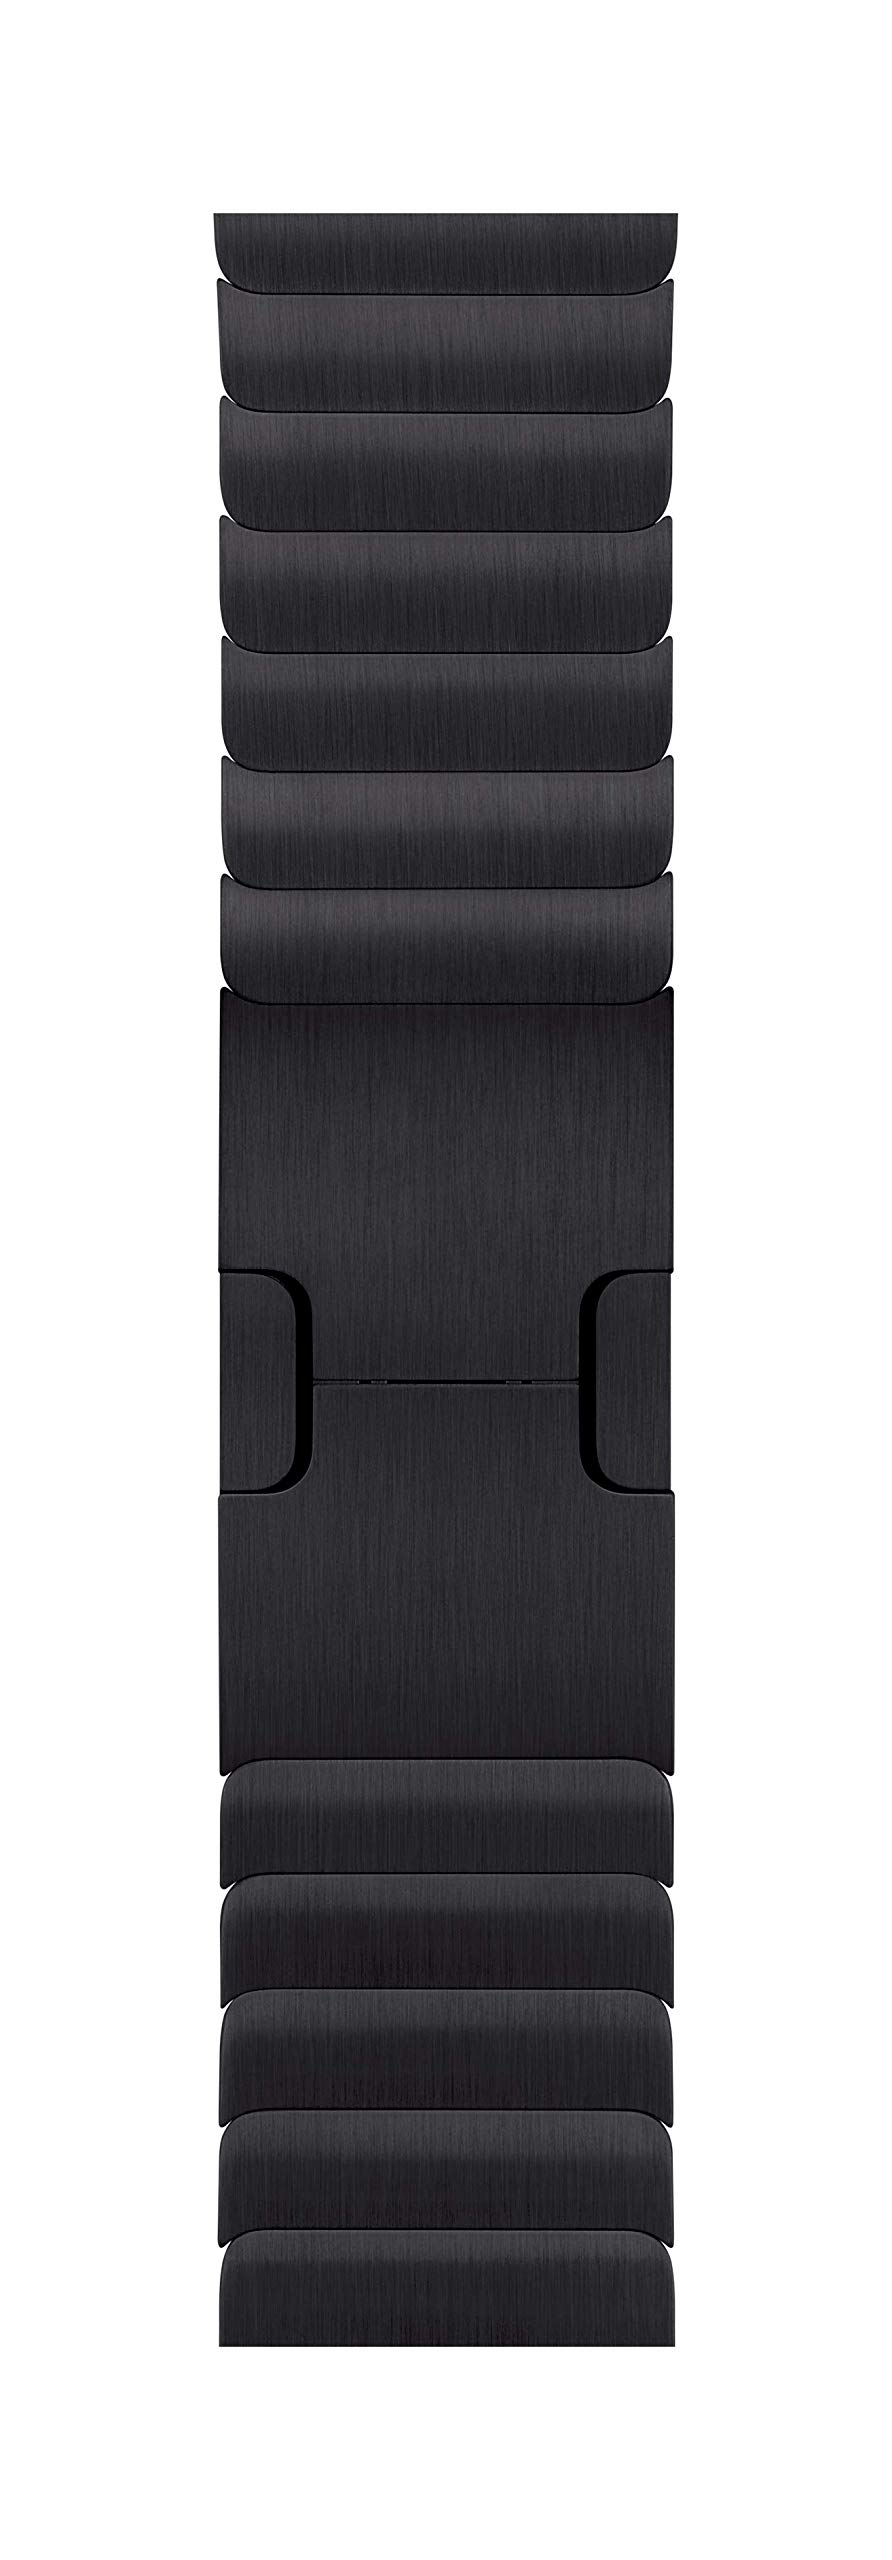 Apple Watch Band - Link Bracelet (42mm) - Space Black